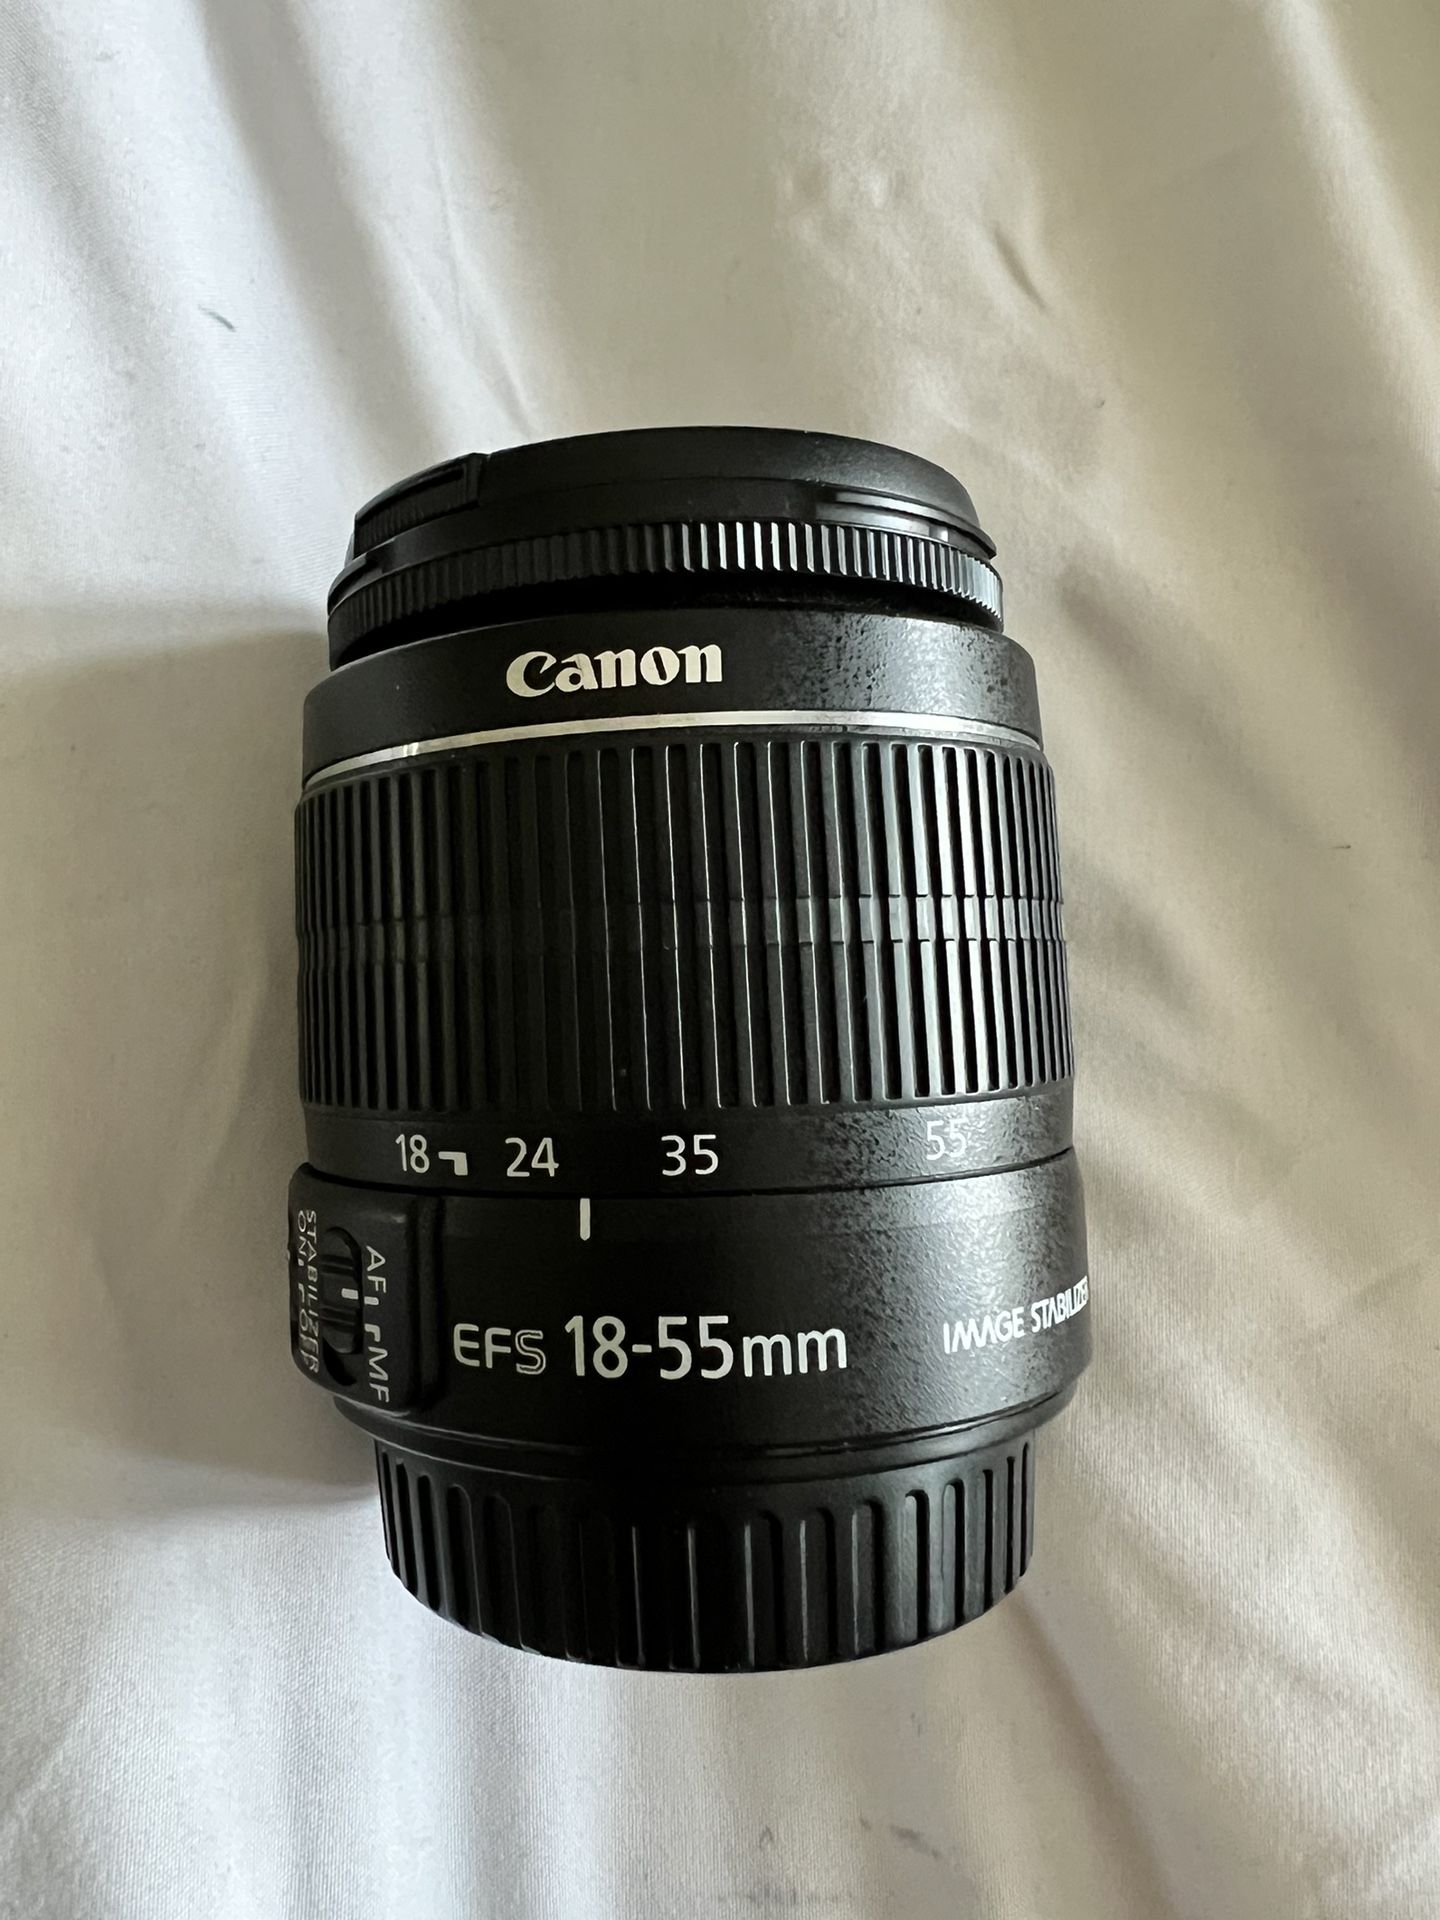 Canon Lens 18-55mm